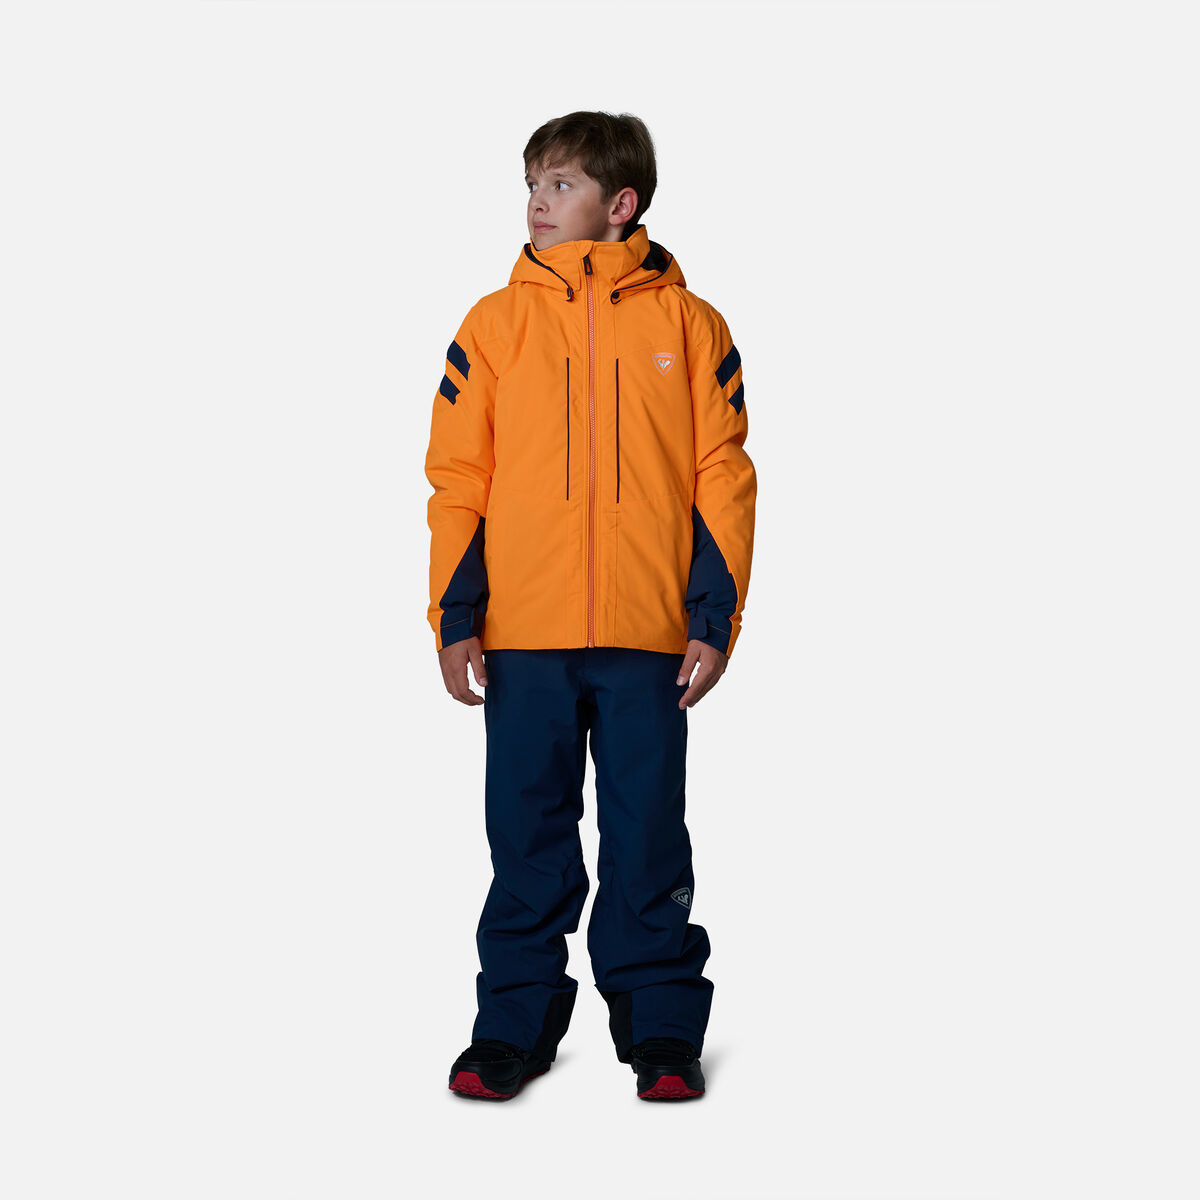 Rossignol Boys' Ski Jacket Orange